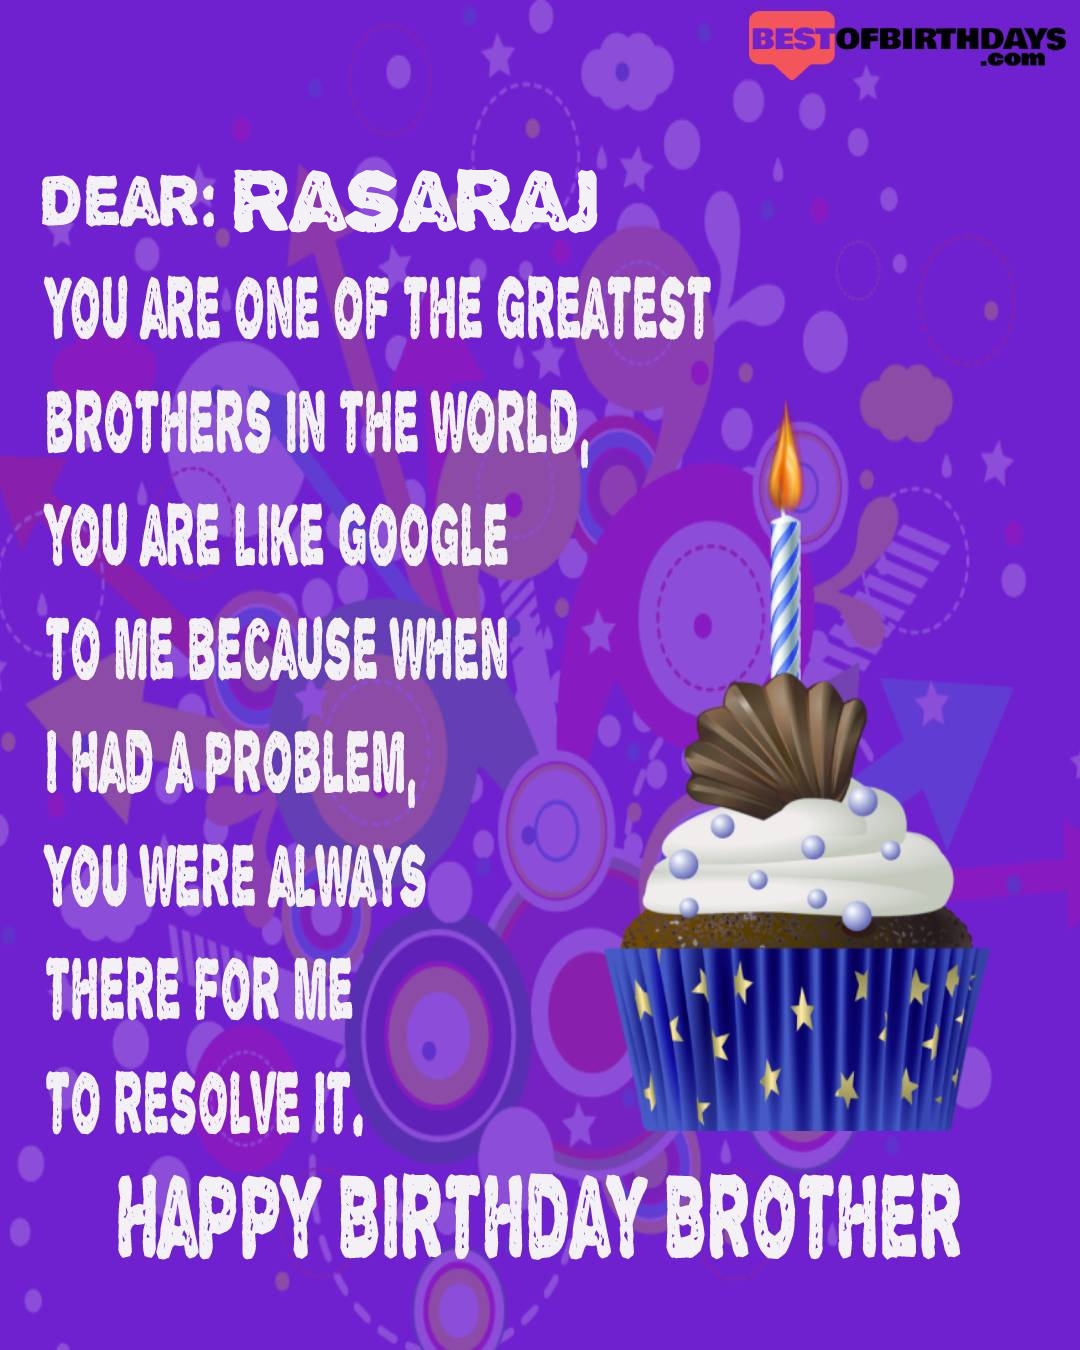 Happy birthday rasaraj bhai brother bro